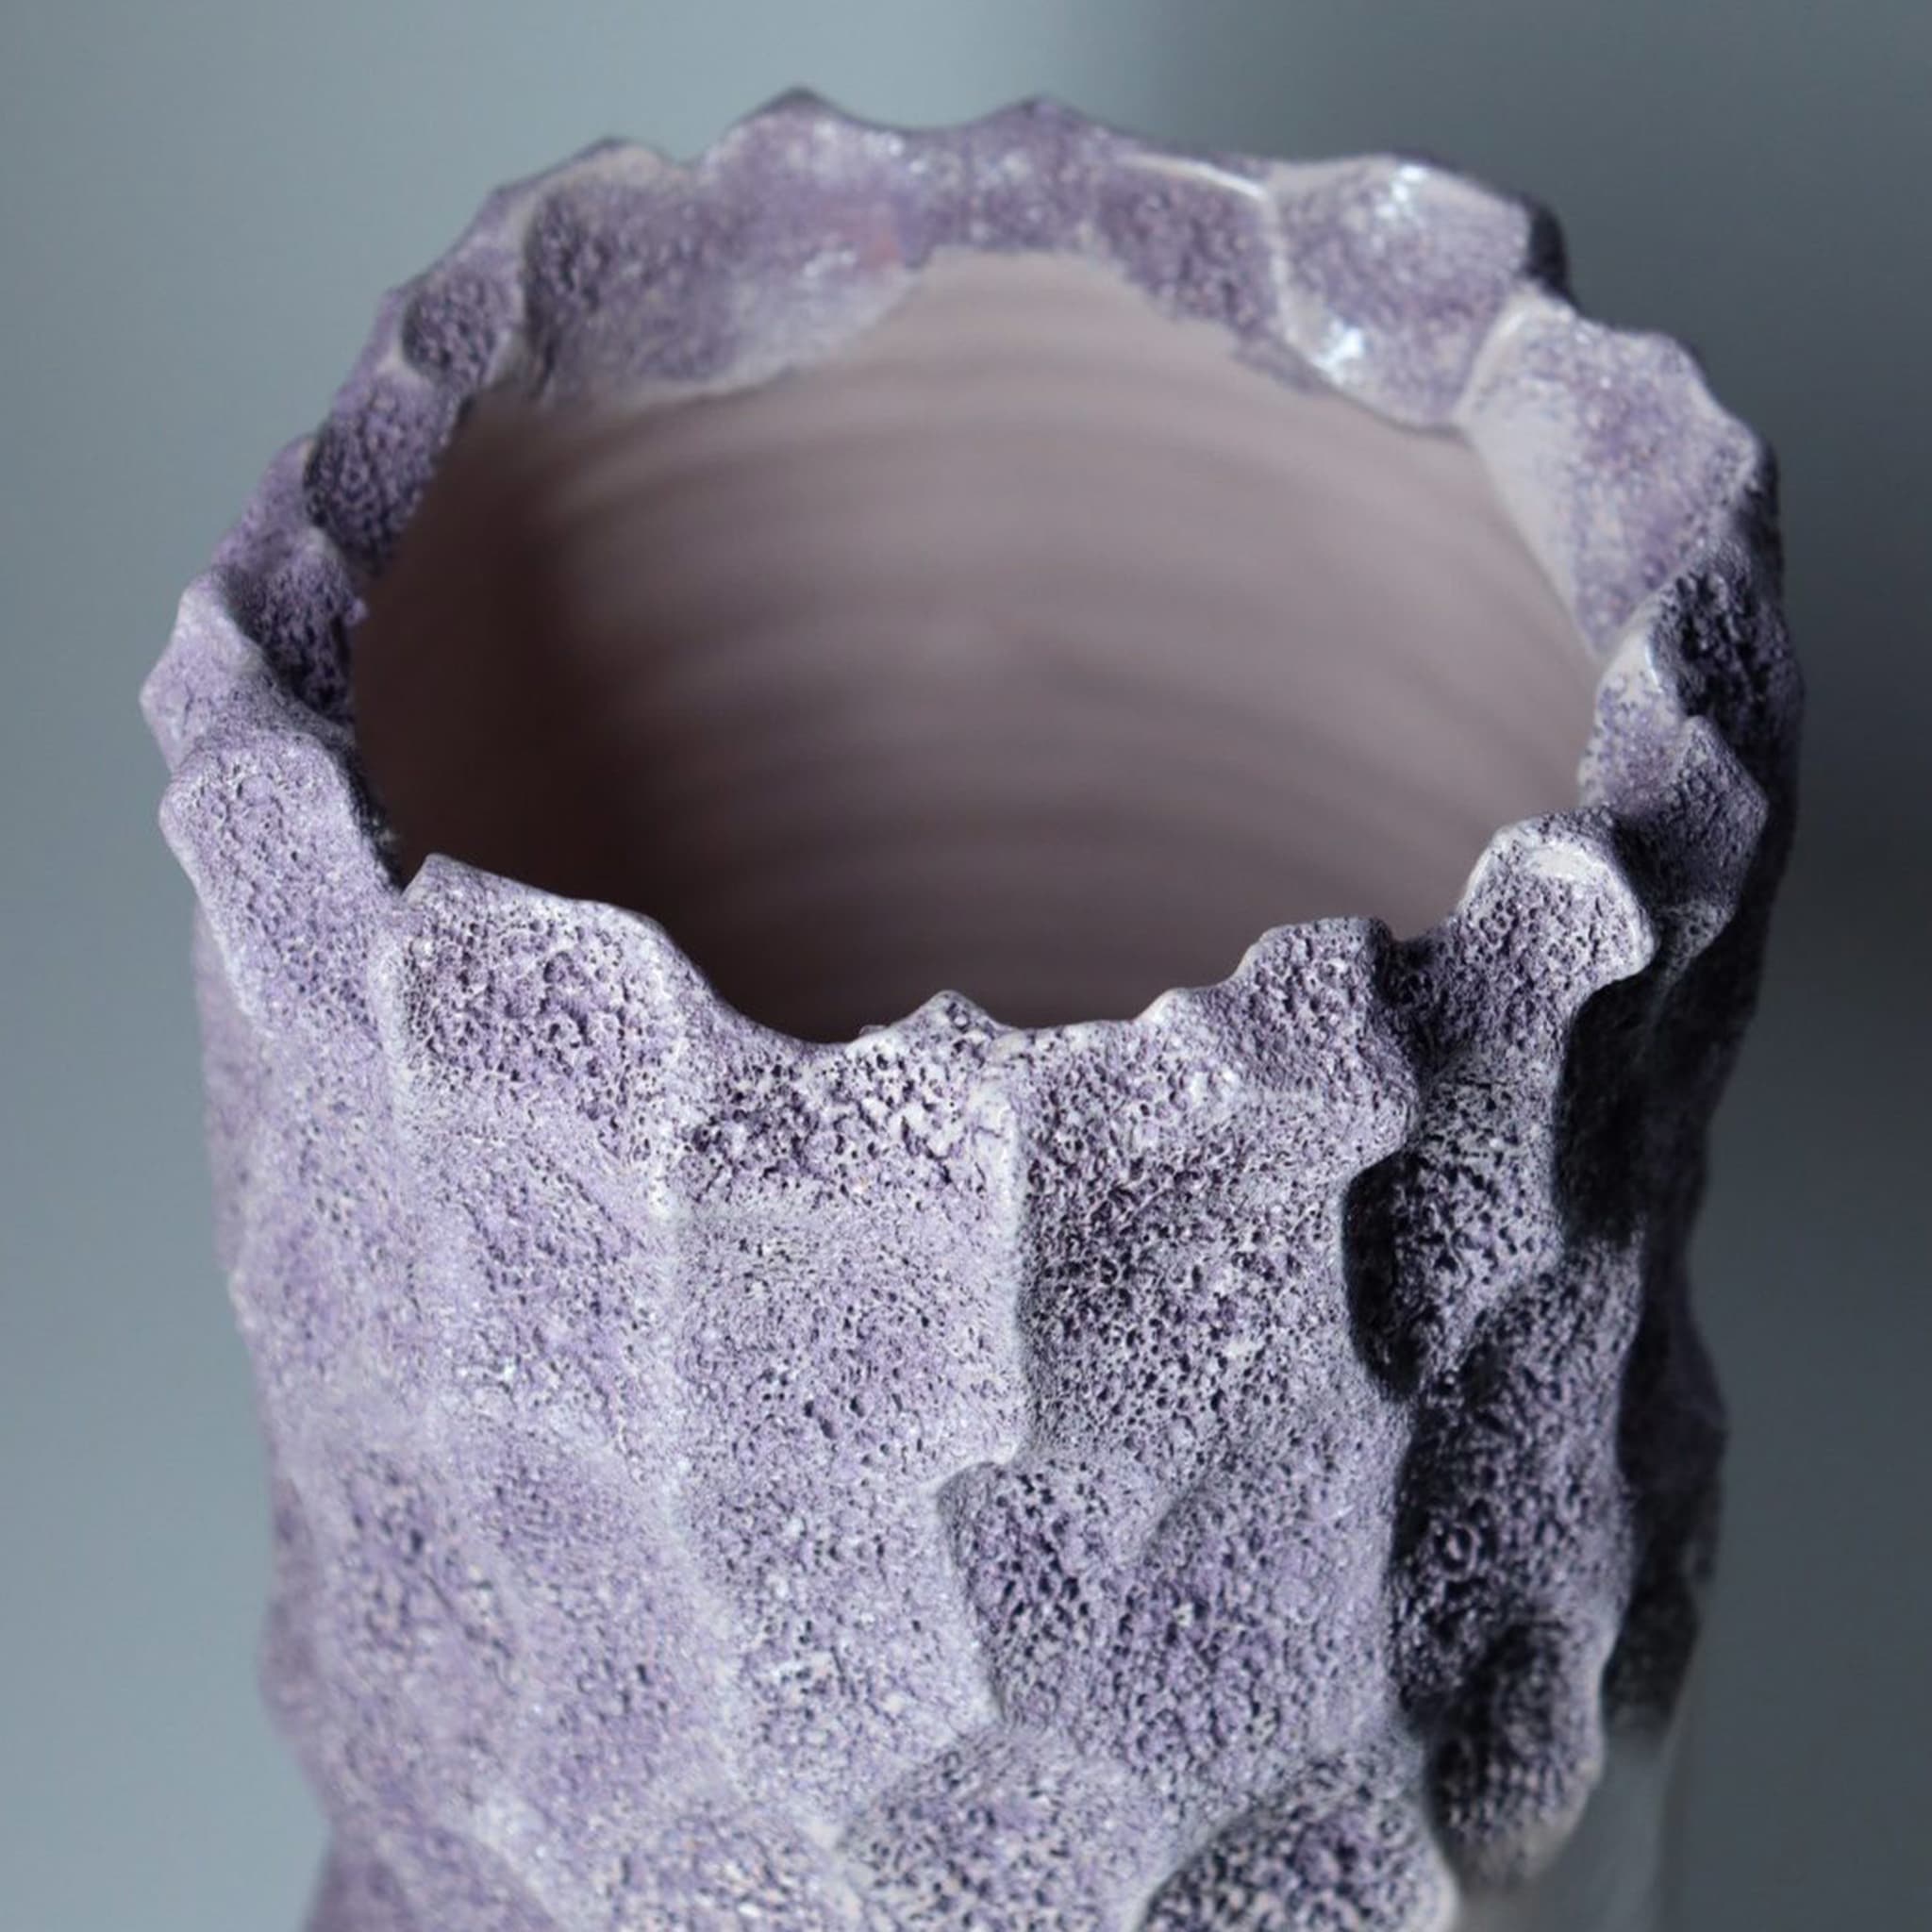 Oxymoron Pink Vase by Patricia Urquiola - Alternative view 2